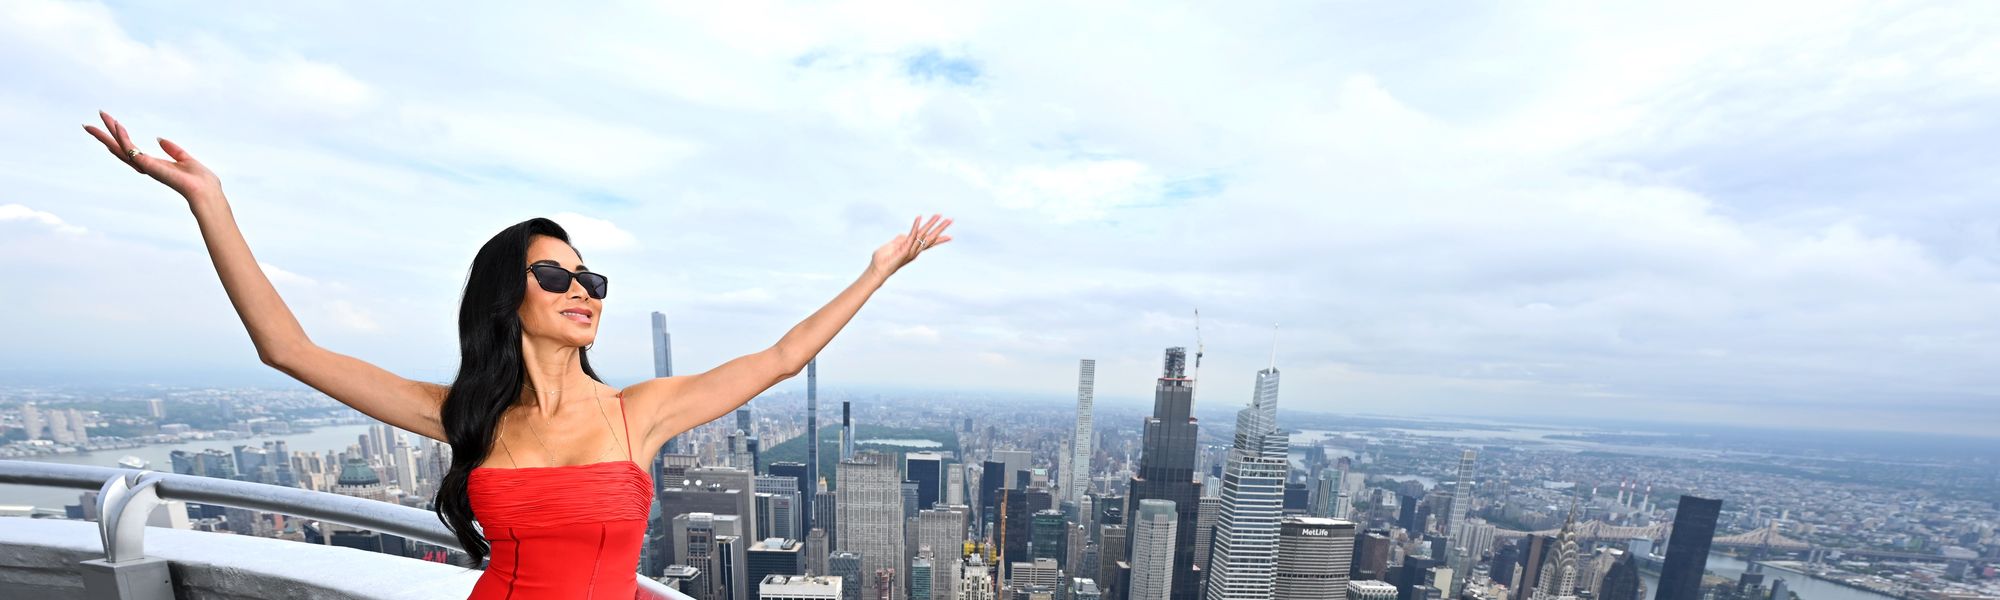 Nicole Scherzinger at the Empire State Building